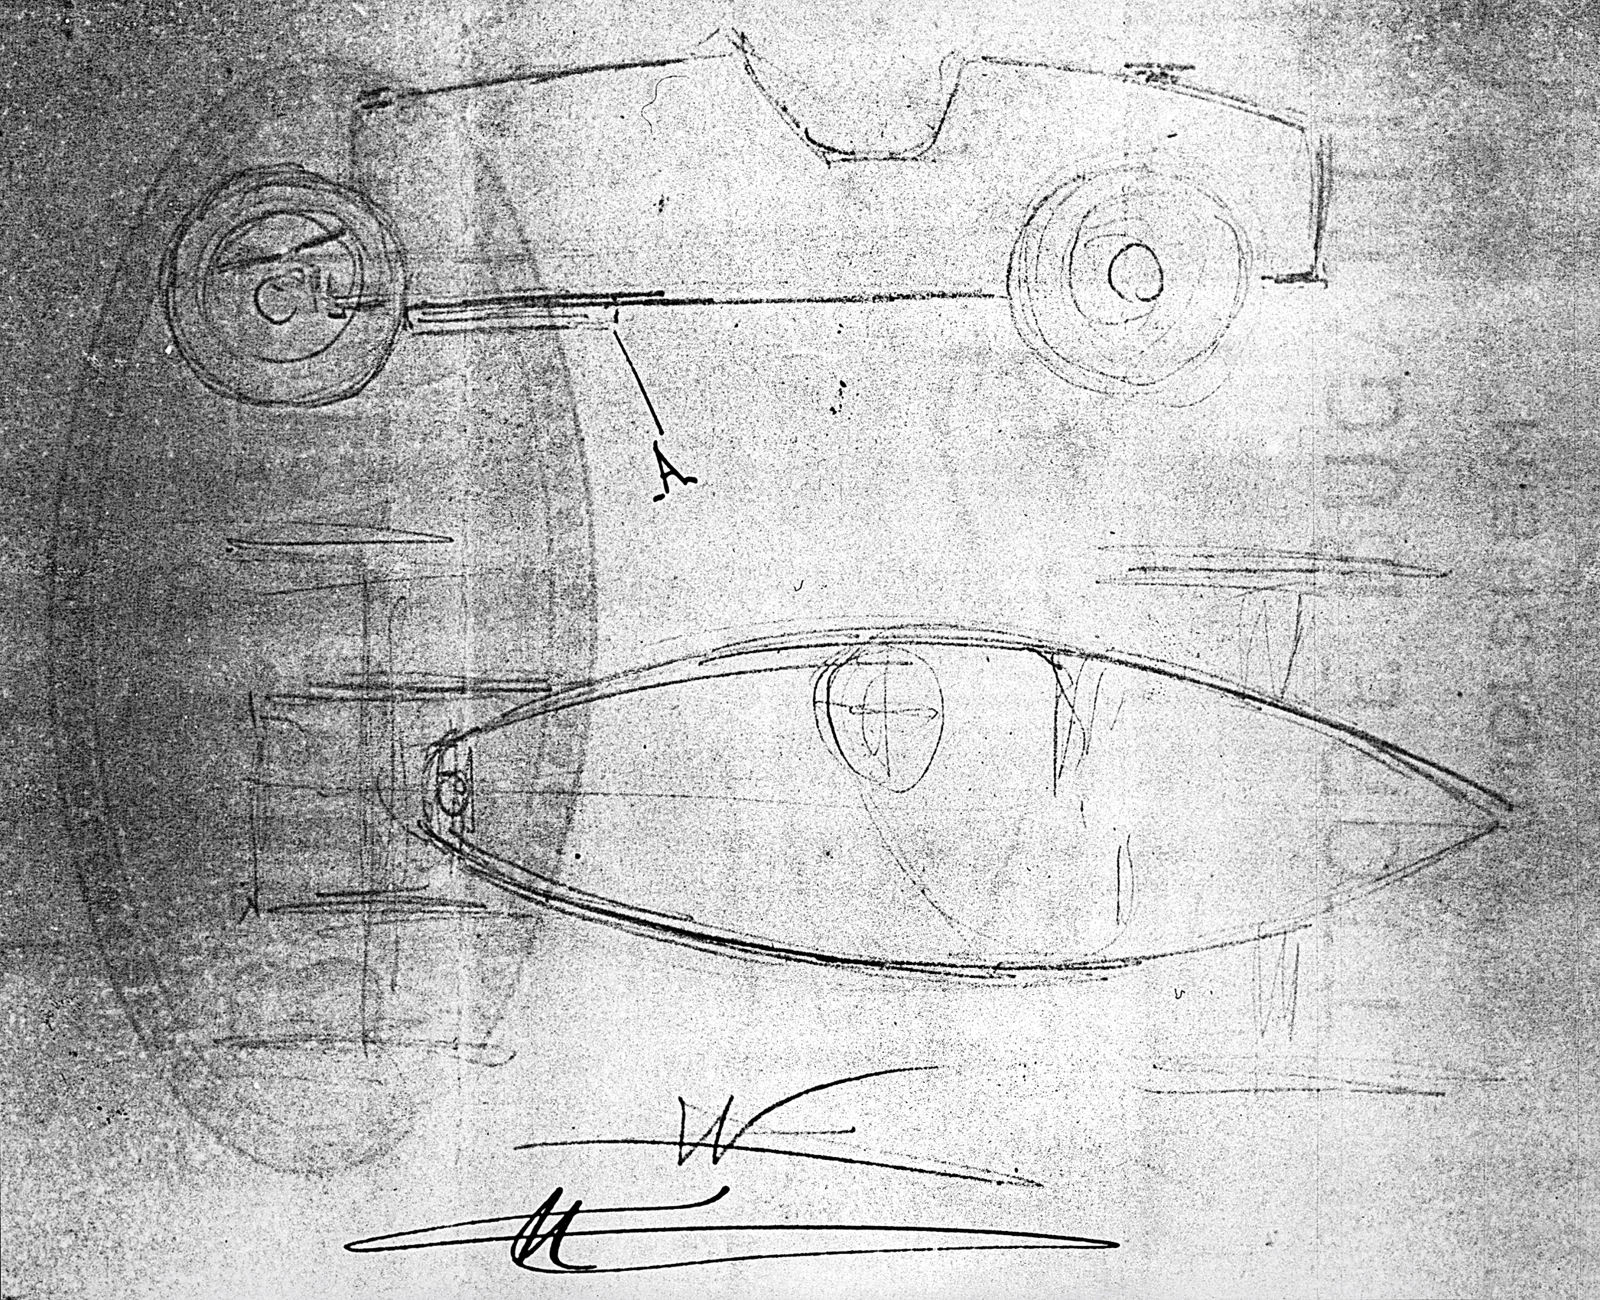 07 BUGATTI_Type 35 Centenary SemanalClásico - Revista online de coches clásicos, de colección y sport - jean bugatti